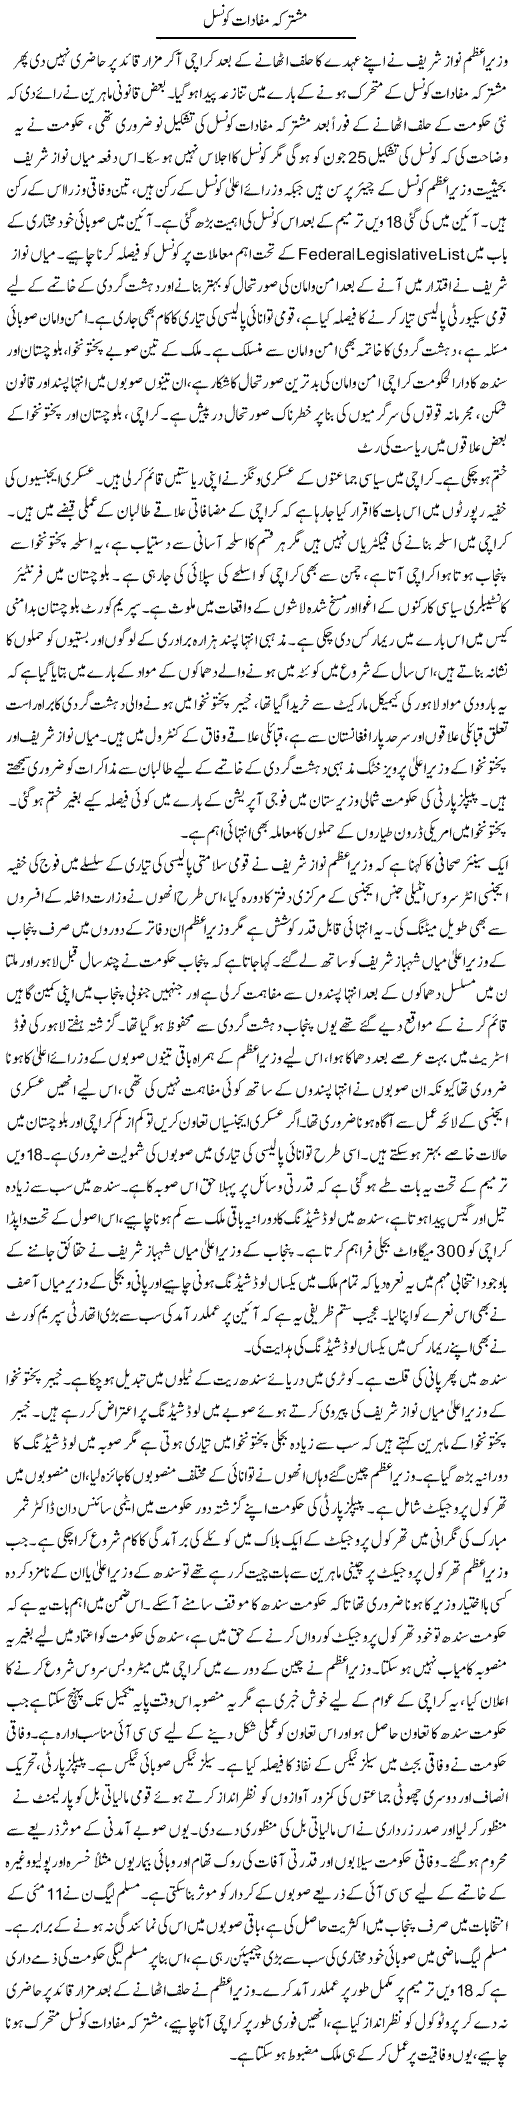 Mushtarka Mafadat Council | Tausif Ahmad Khan | Daily Urdu Columns